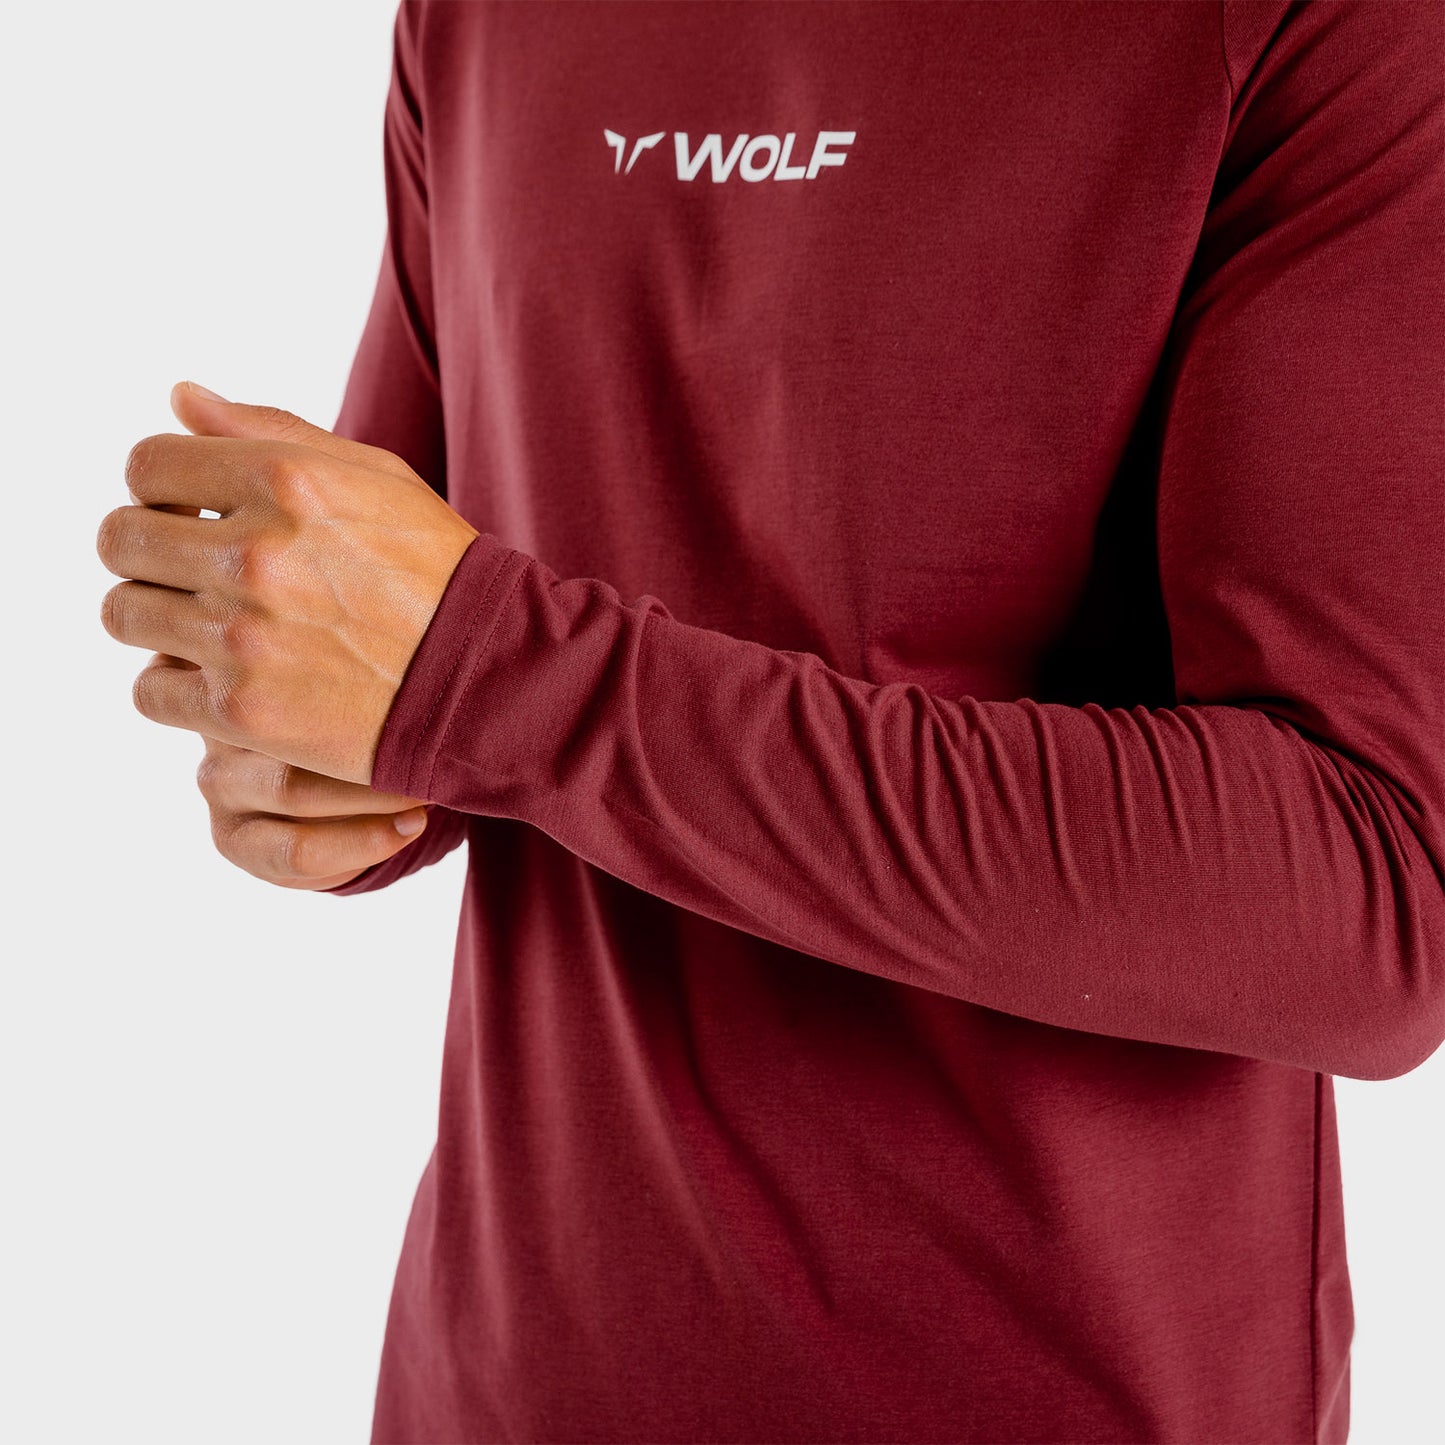 squatwolf-workout-shirts-for-men-primal-men-tee-teal-gym-wear